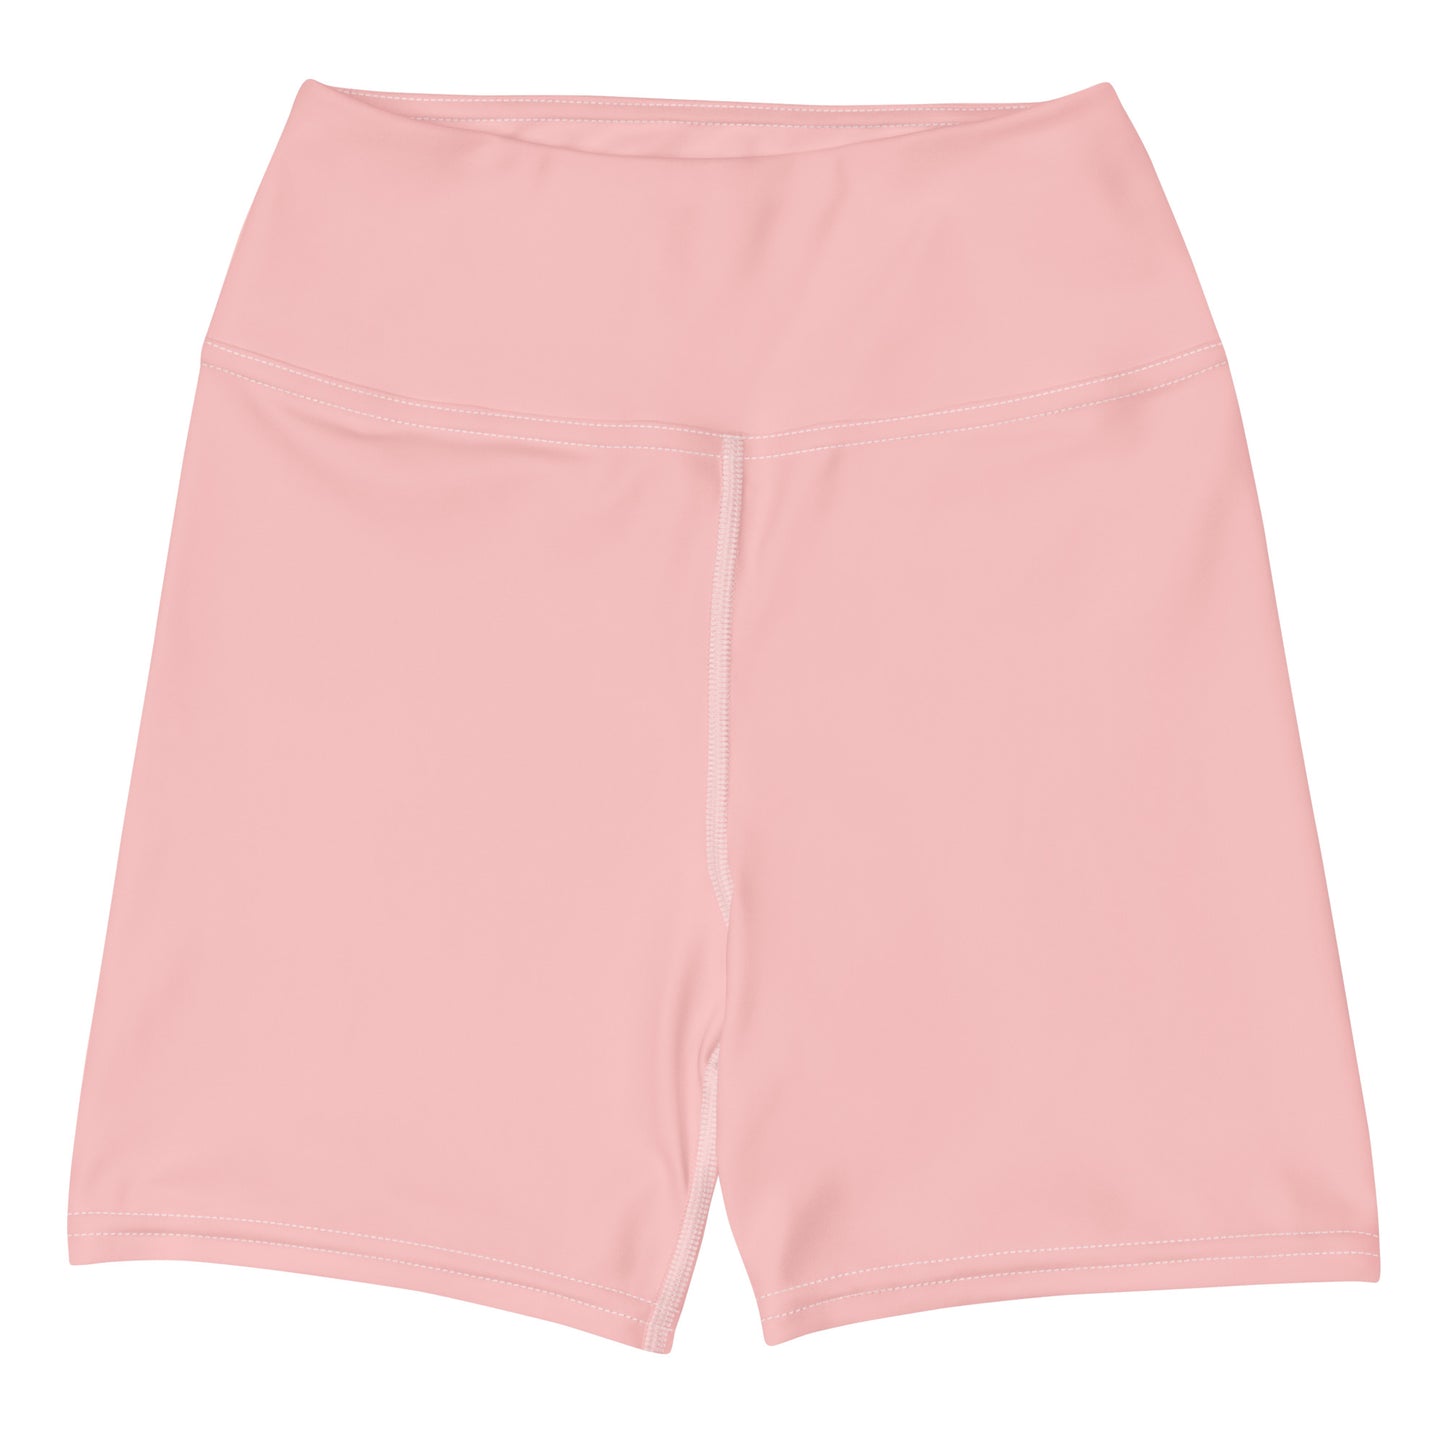 Voyager Pink High-Waisted Yoga Shorts